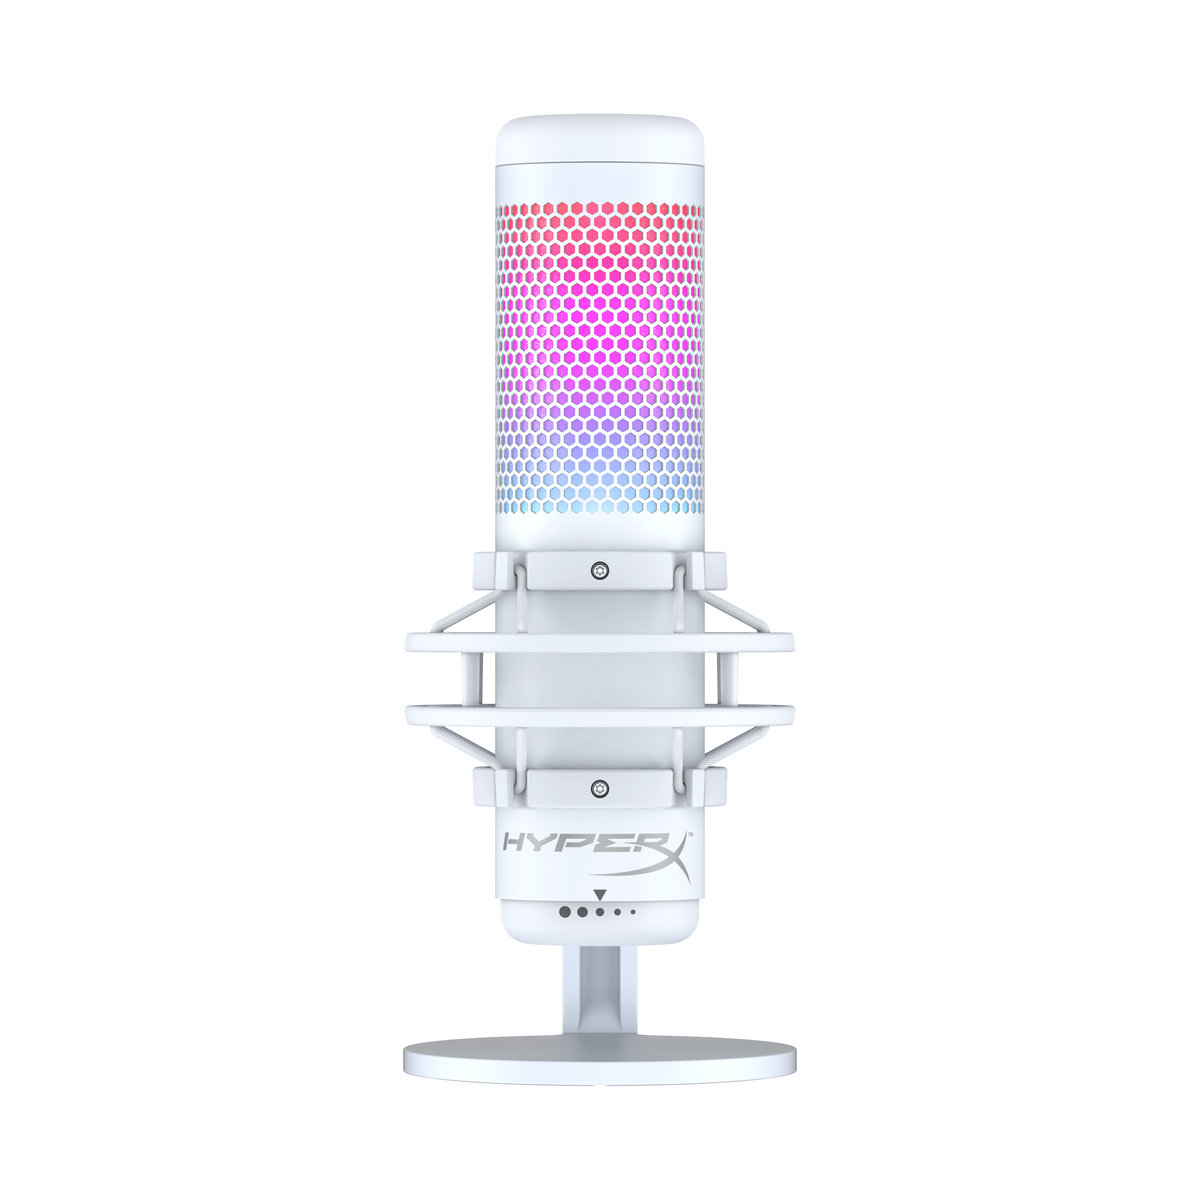 HyperX QuadCast S - USB Microphone (White) - RGB Lighting (519P0AA)